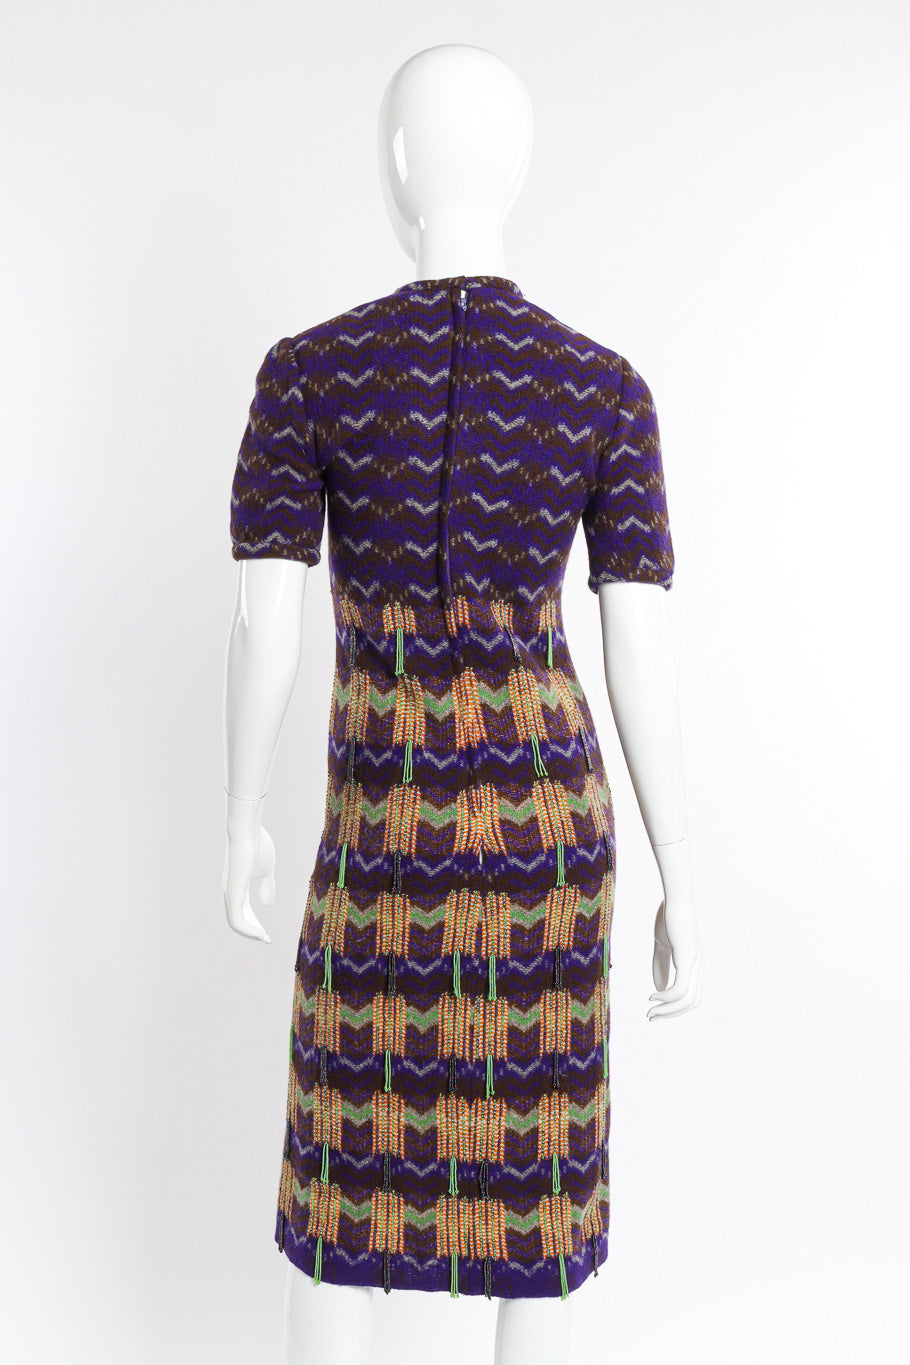 Vintage Richard Tam/Jon Mandl Chevron Knit Loop Dress back on mannequin @recessla